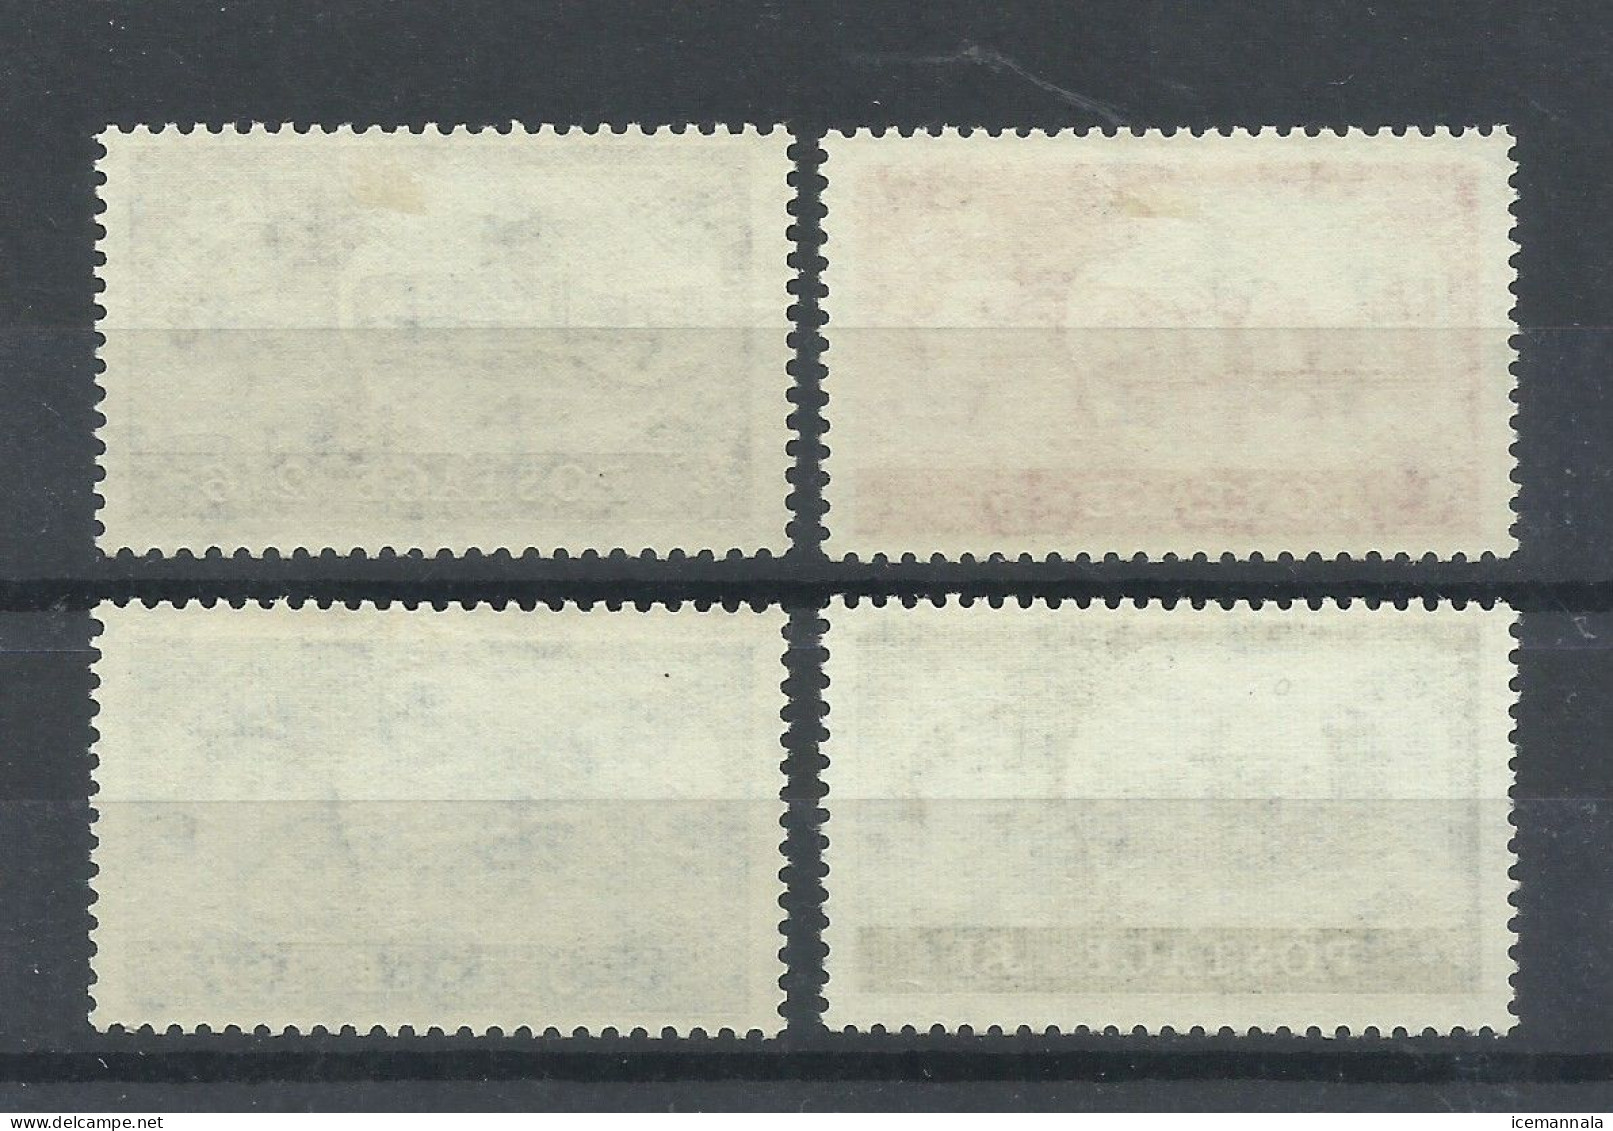 GRAN BRETAÑA  YVERT  351/54   (CERTIFICADO  C.M.F.)   MH  * - Unused Stamps